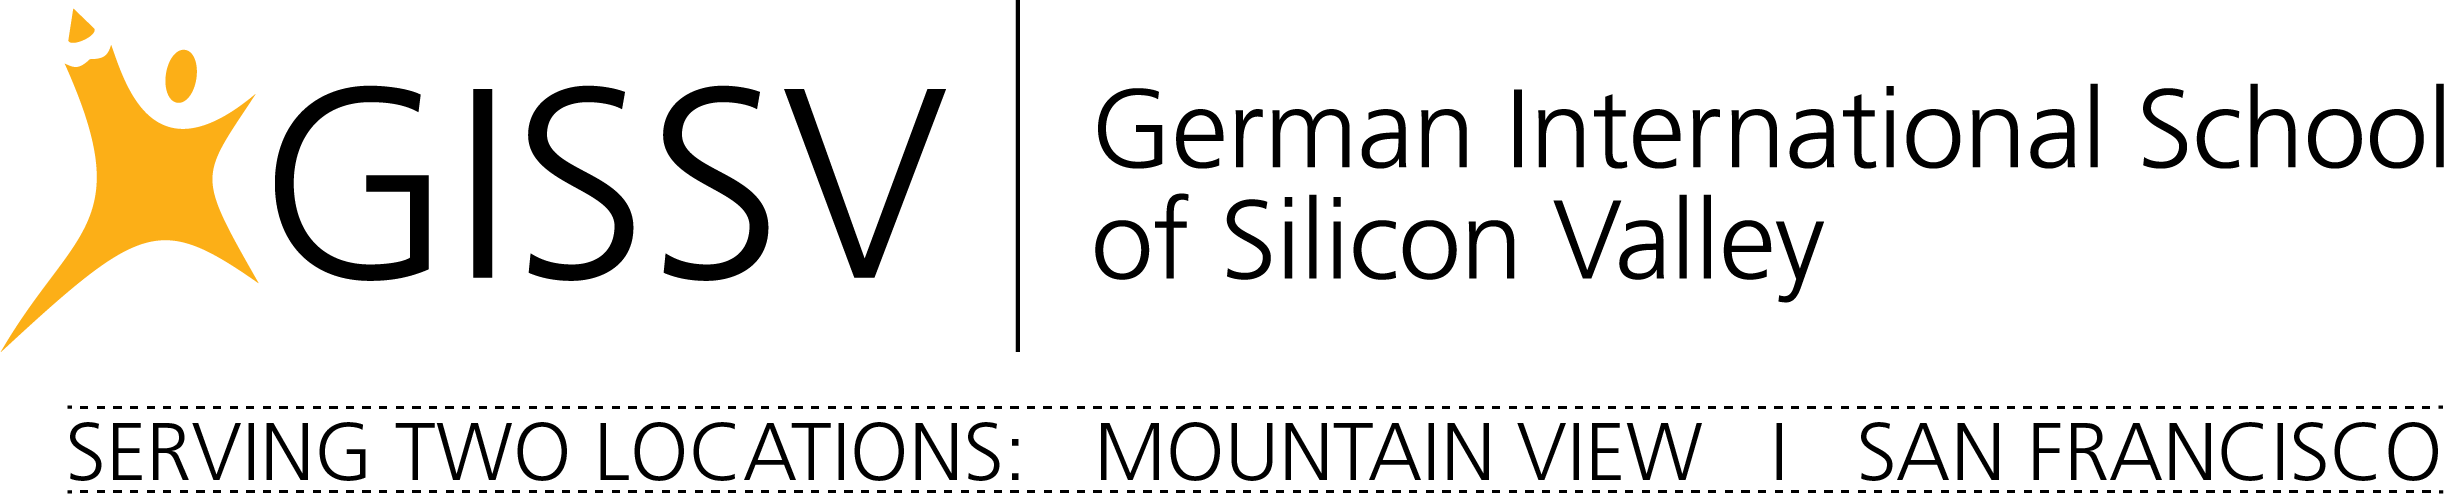 German International School of Silicon Valley